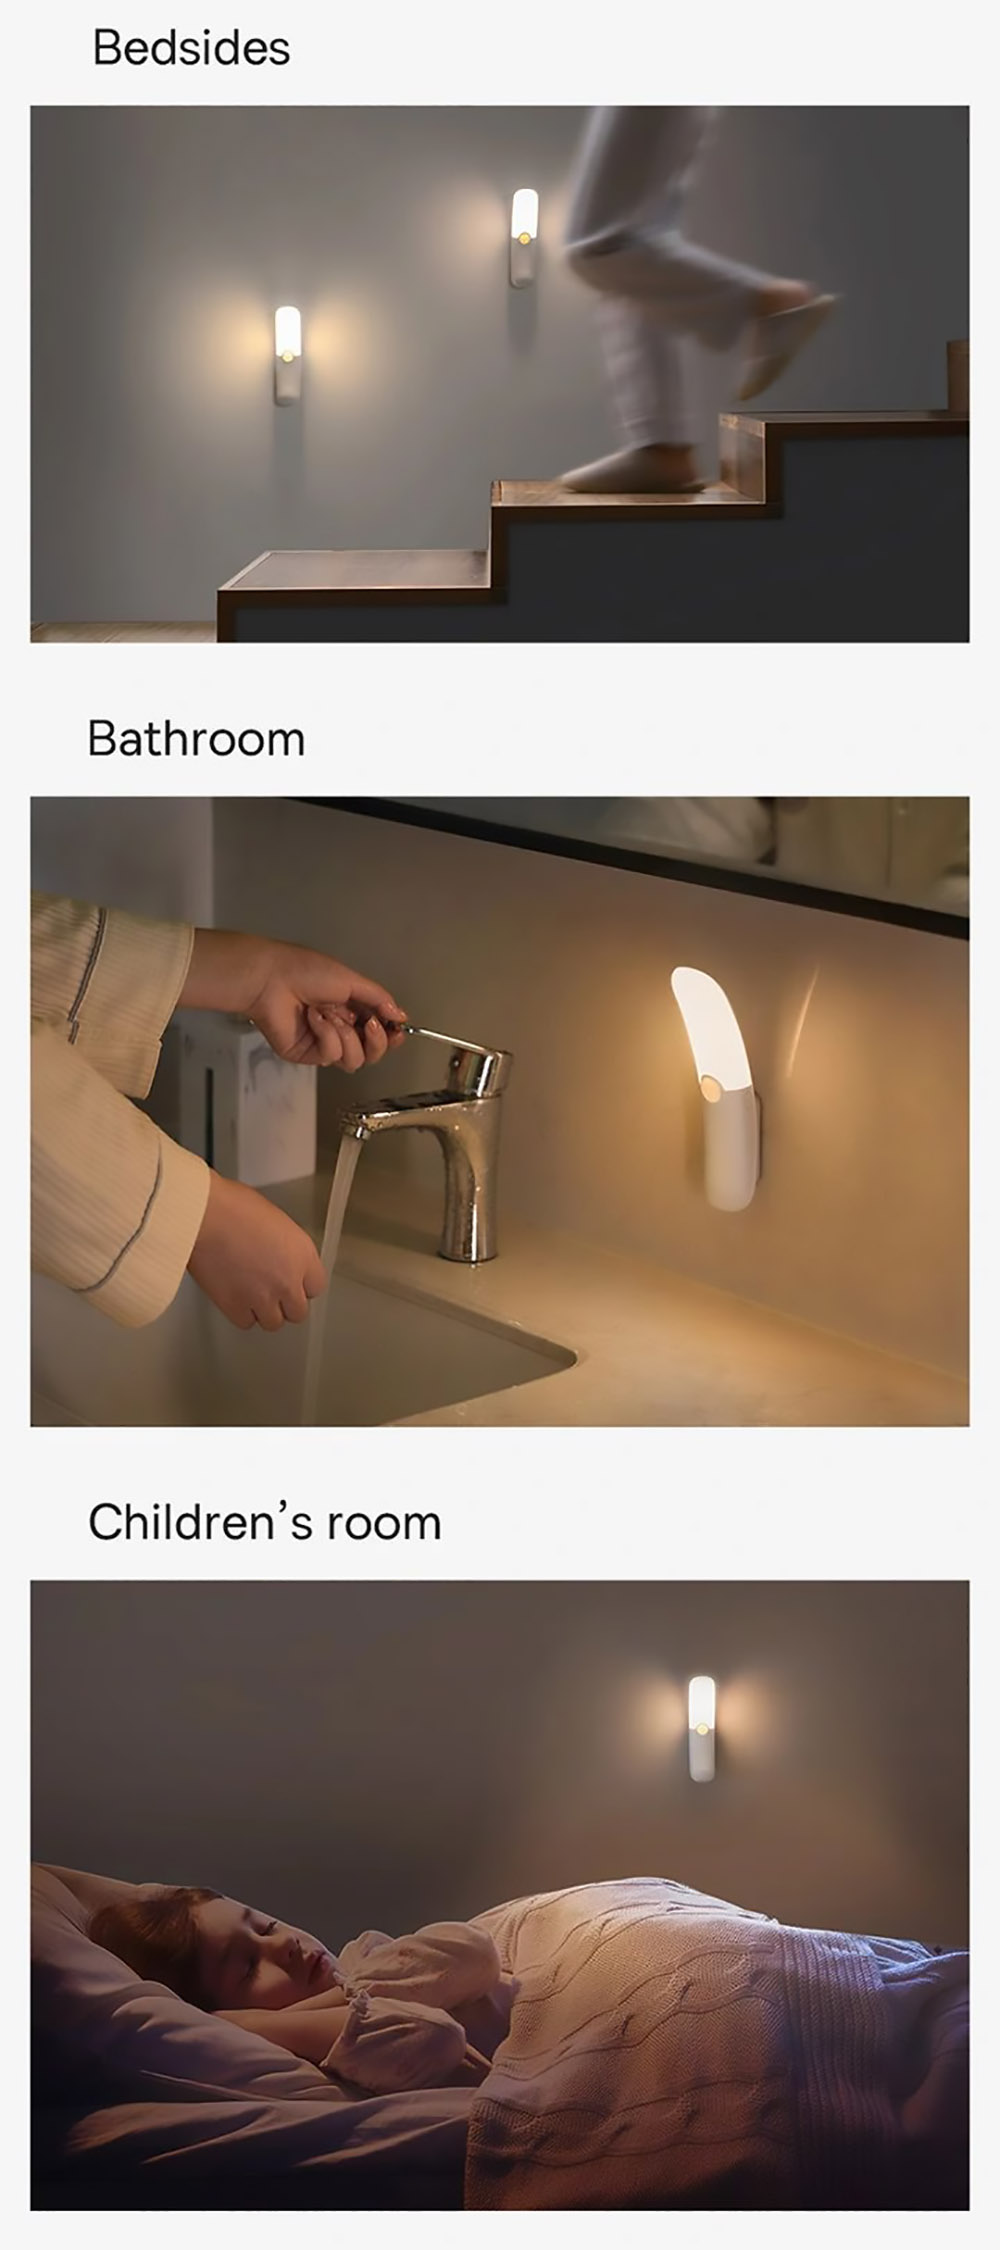 Baseus Sunshine Series Crescents PIR Motion Sensor Night Light for Corridor Bedside Bedroom Toilet